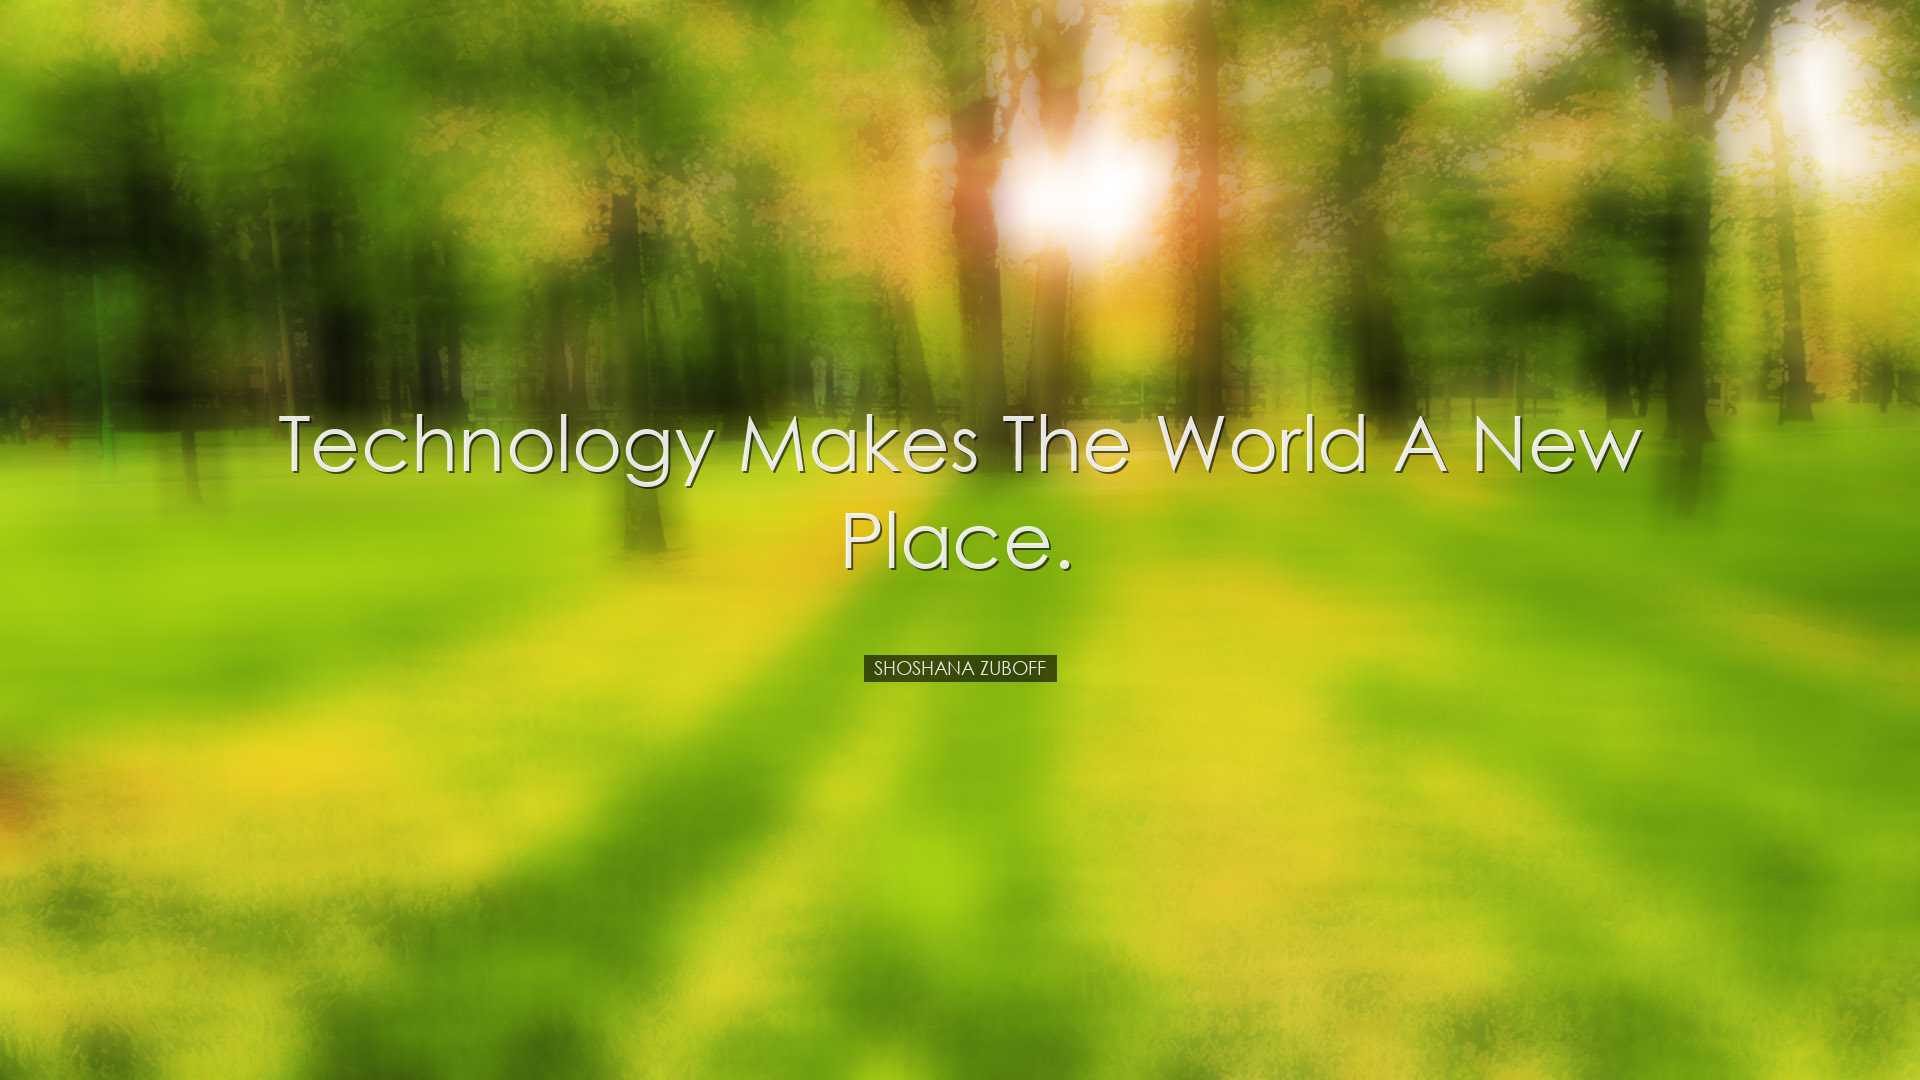 Technology makes the world a new place. - Shoshana Zuboff